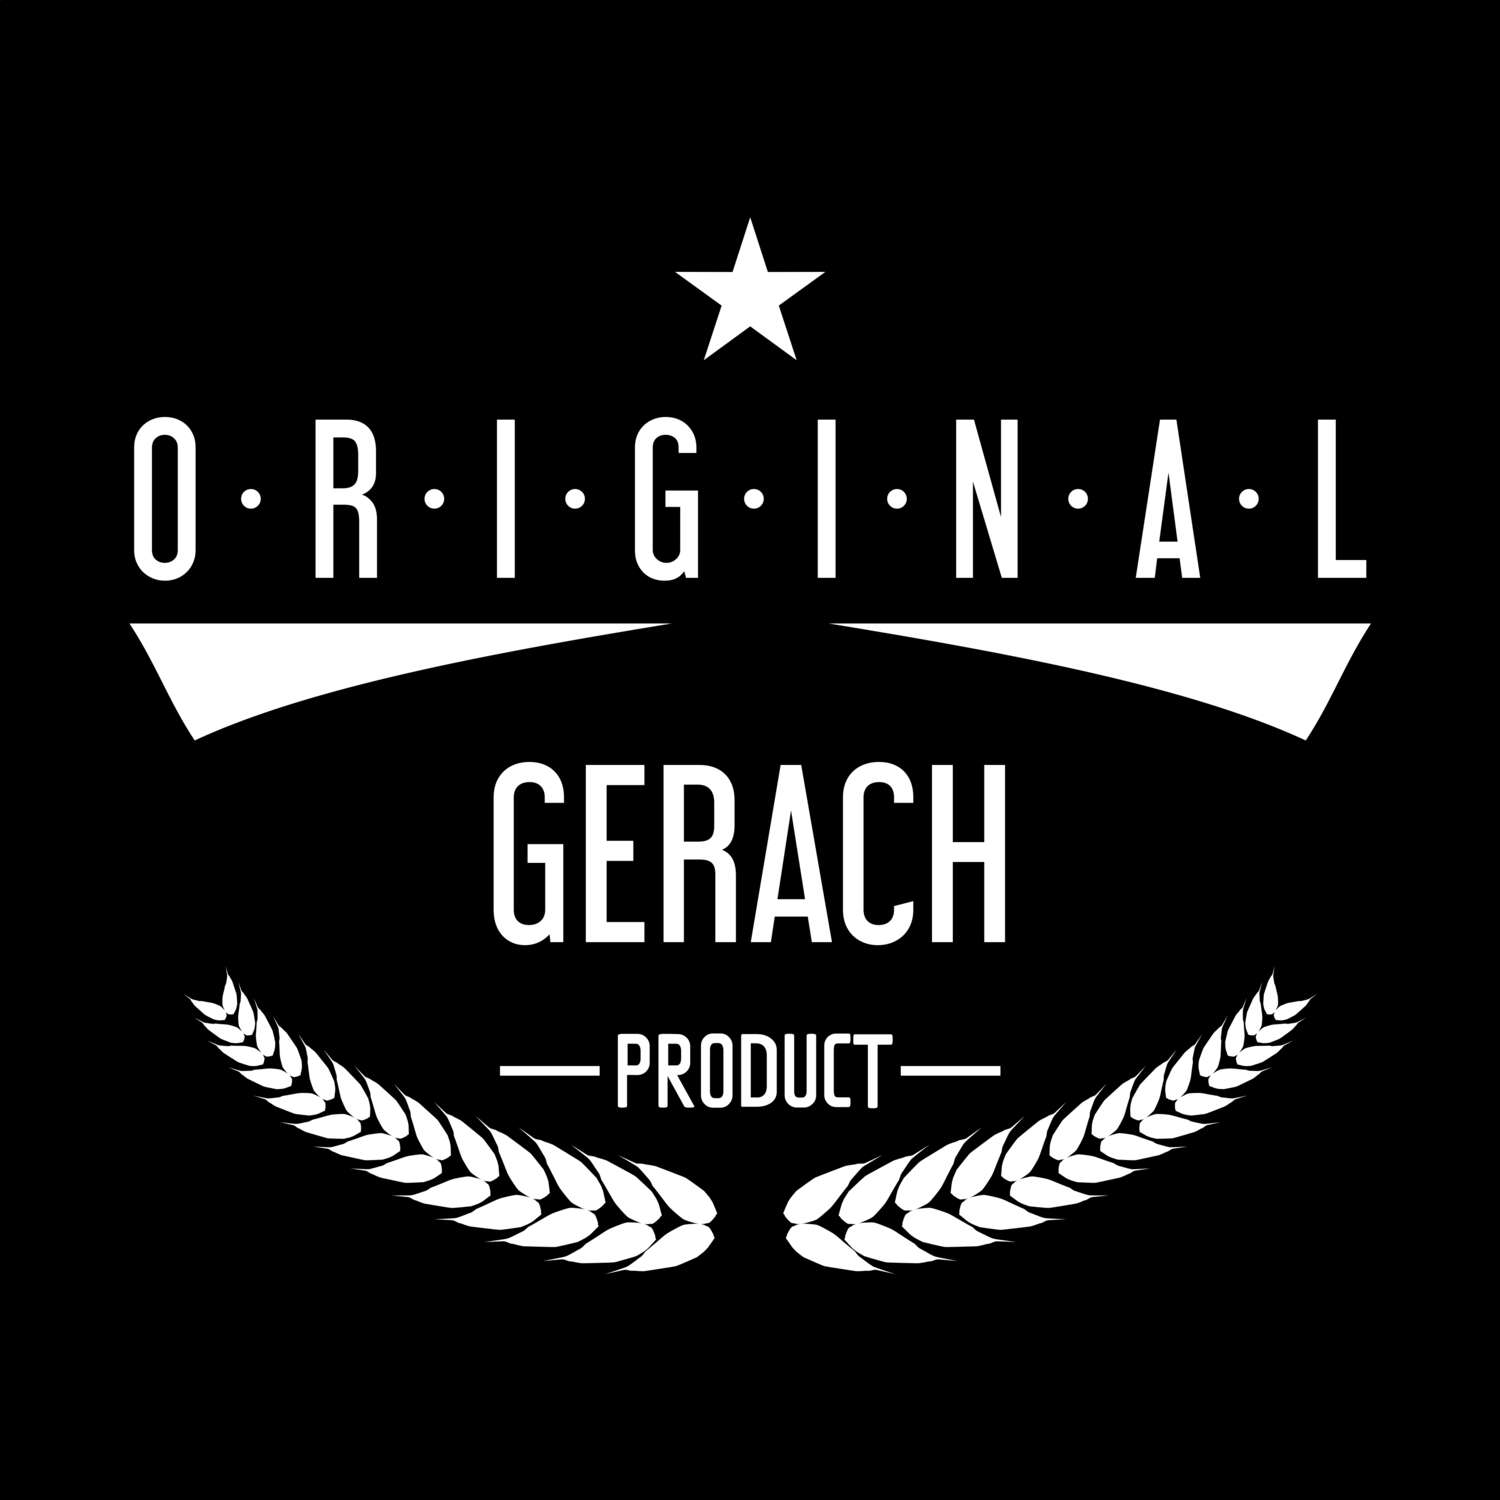 Gerach T-Shirt »Original Product«